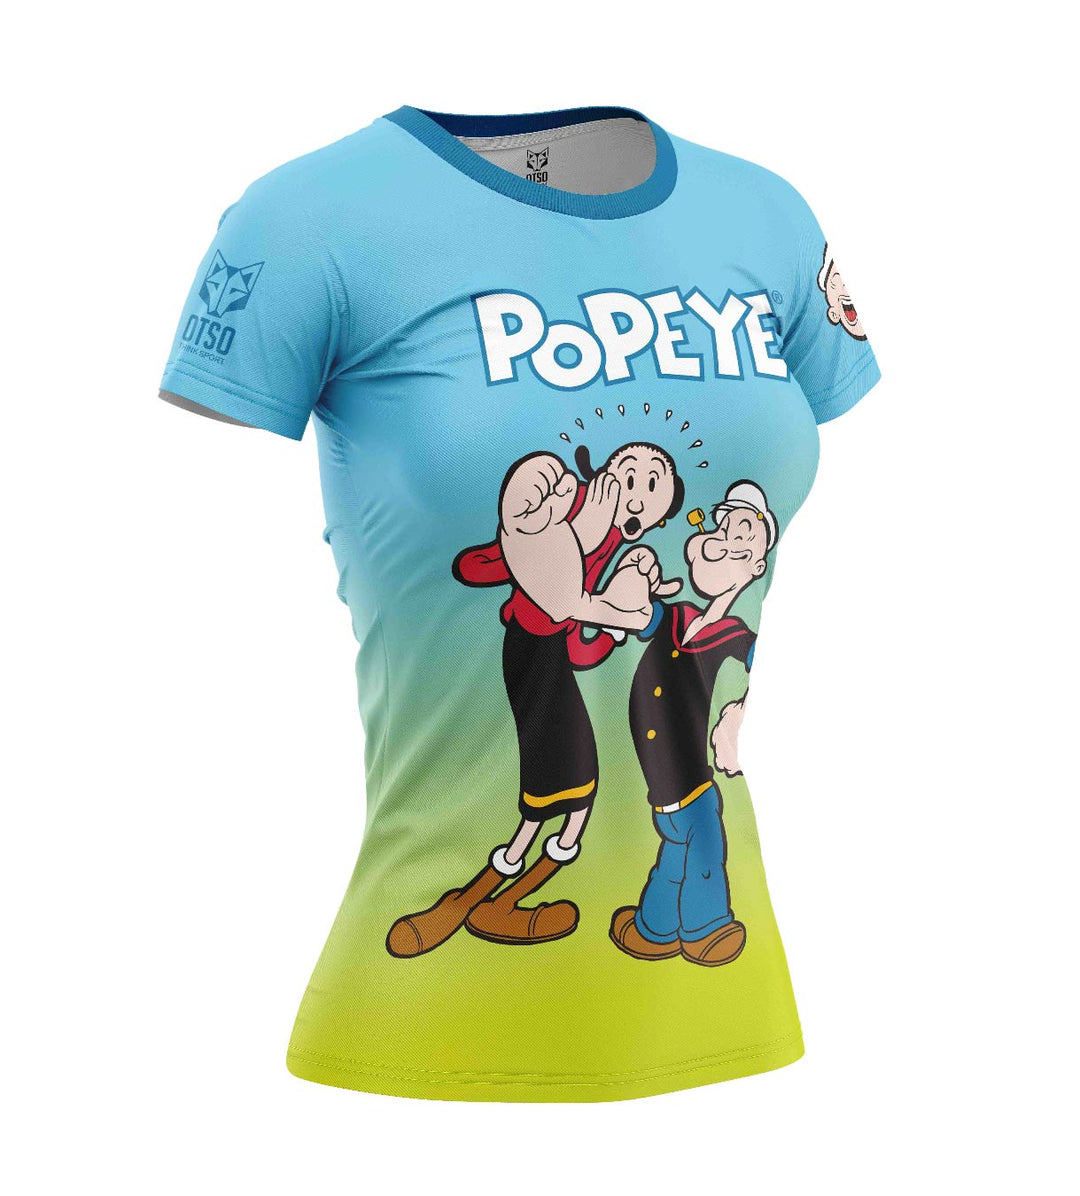 OTSO Women's T-Shirt Popeye and Olive (レディース半袖Tシャツ ポパイ アンド オリーブ)